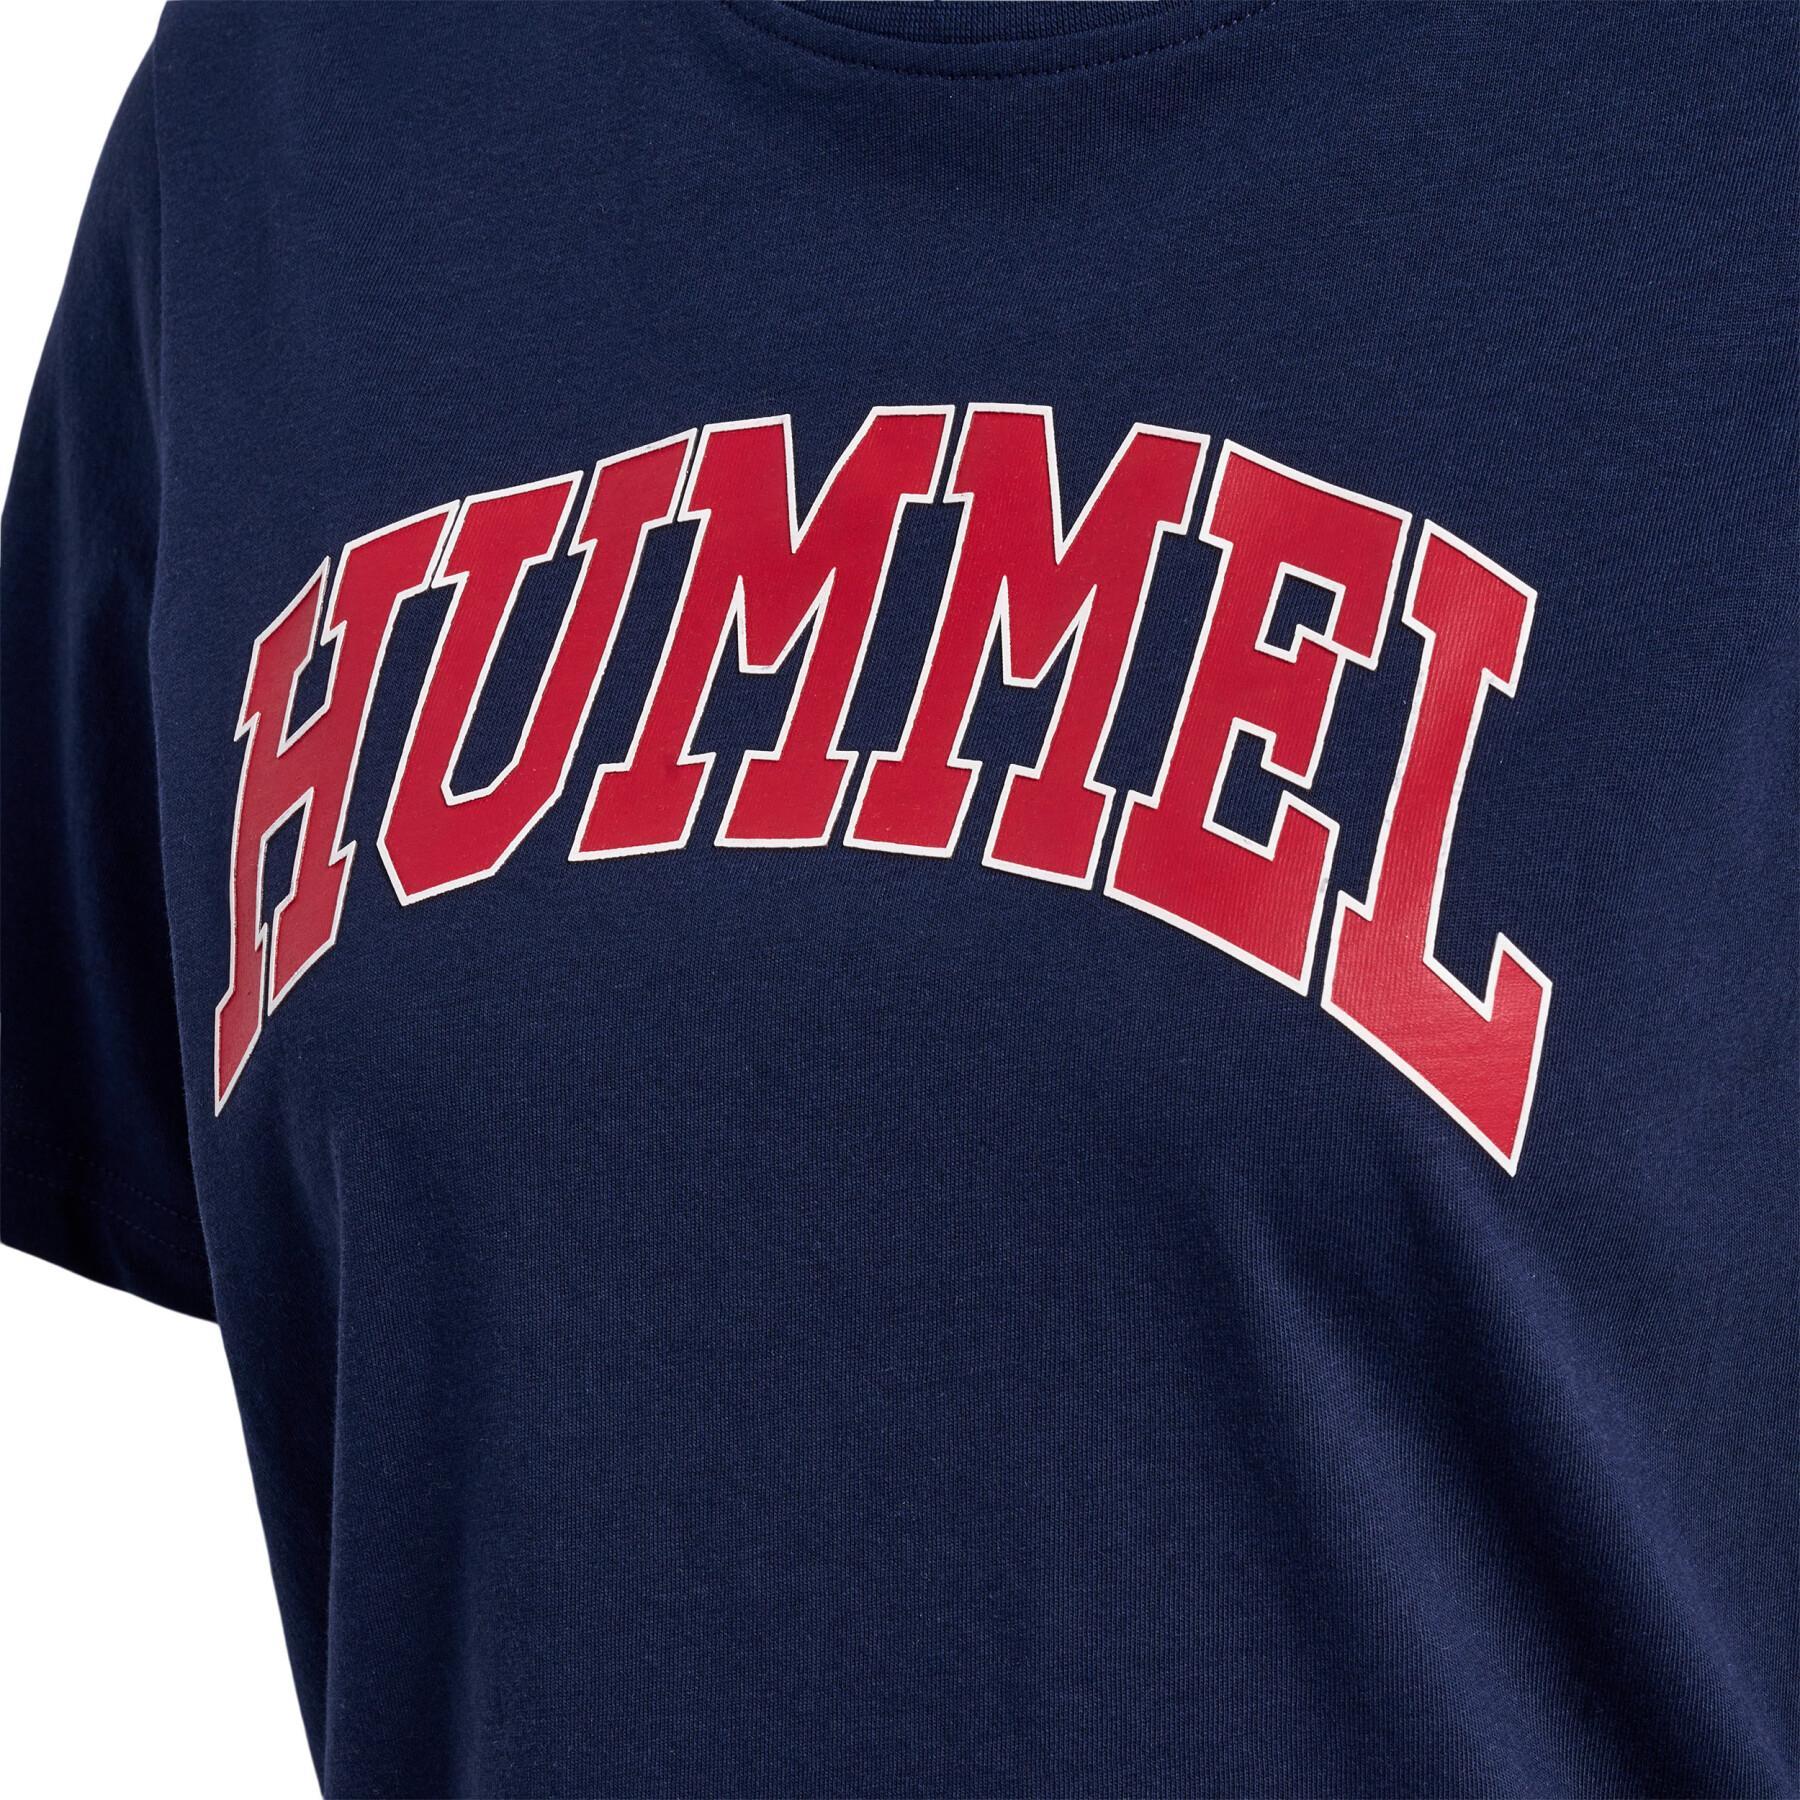 Women's T-shirt Hummel Ic Gill Loose